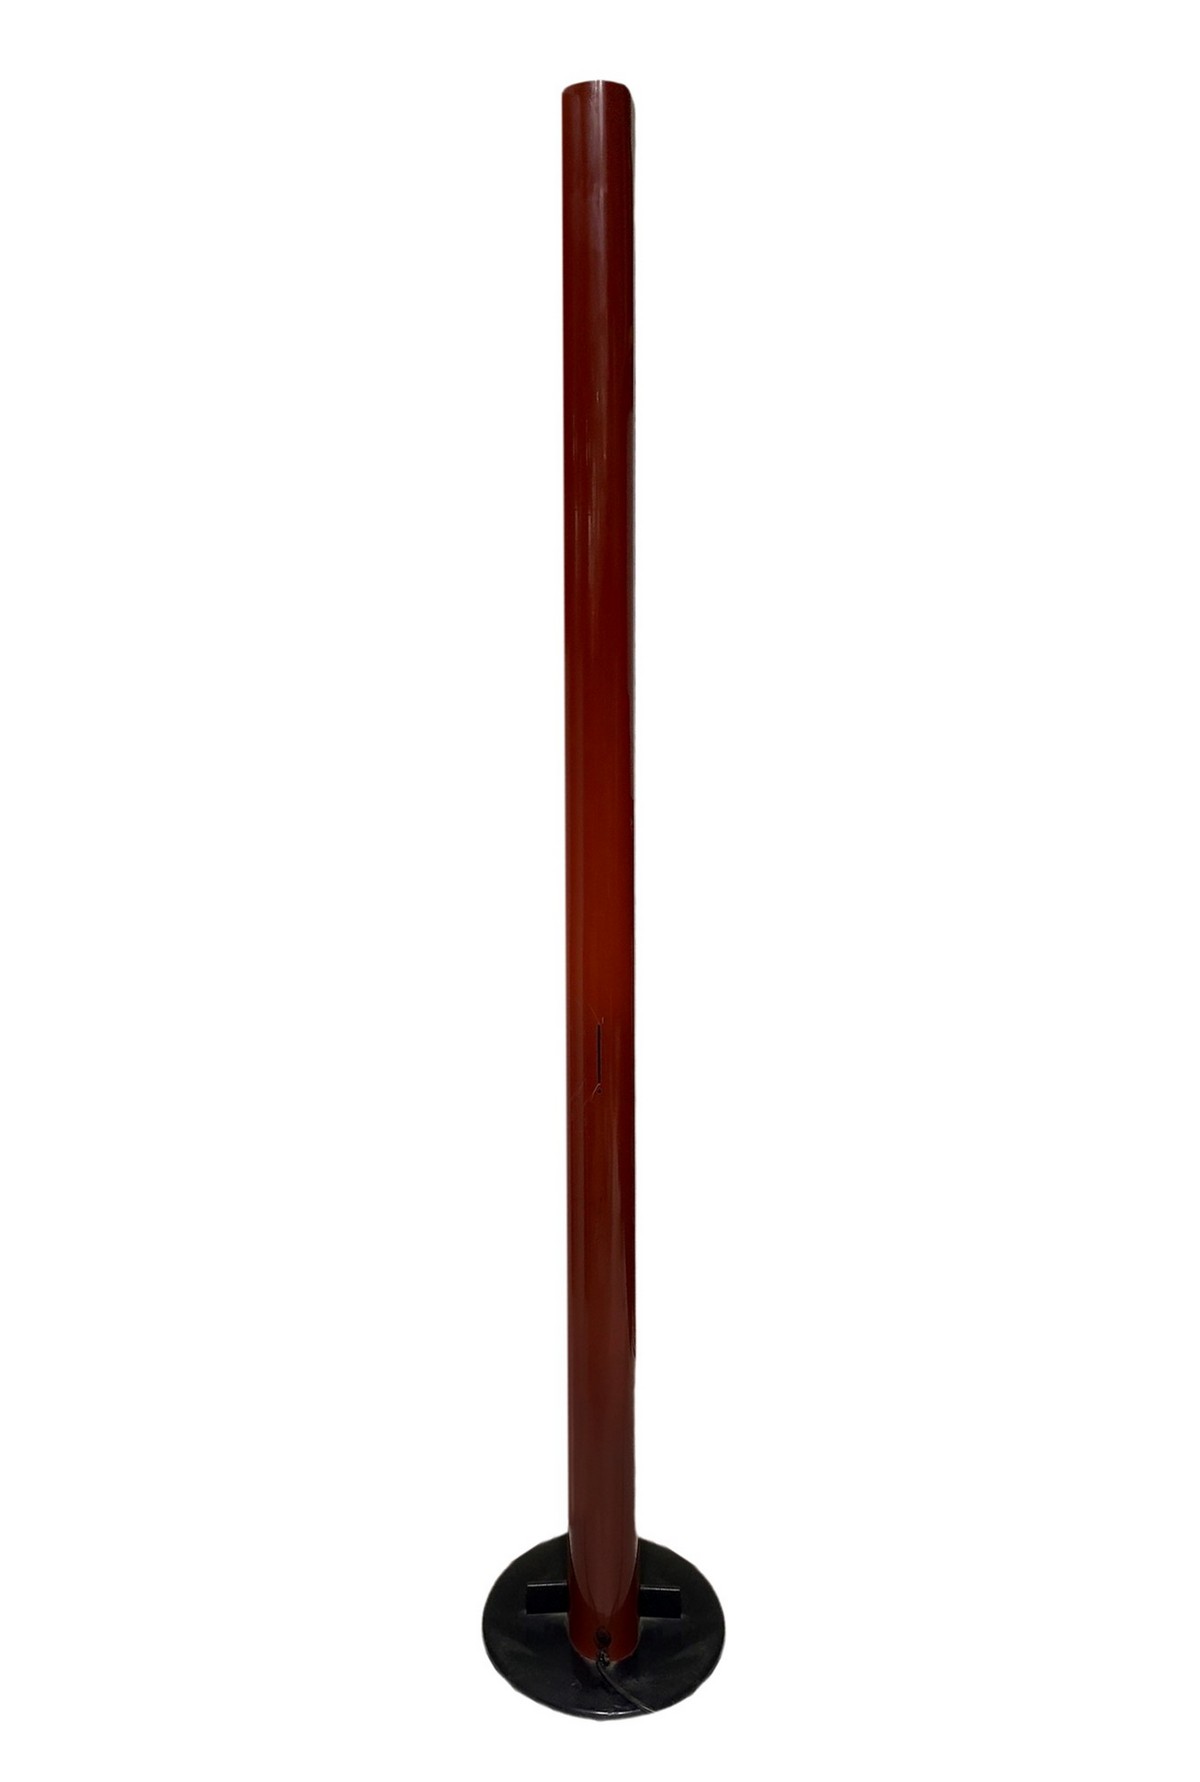 Bordeaux metal floor lamp - Image 4 of 4